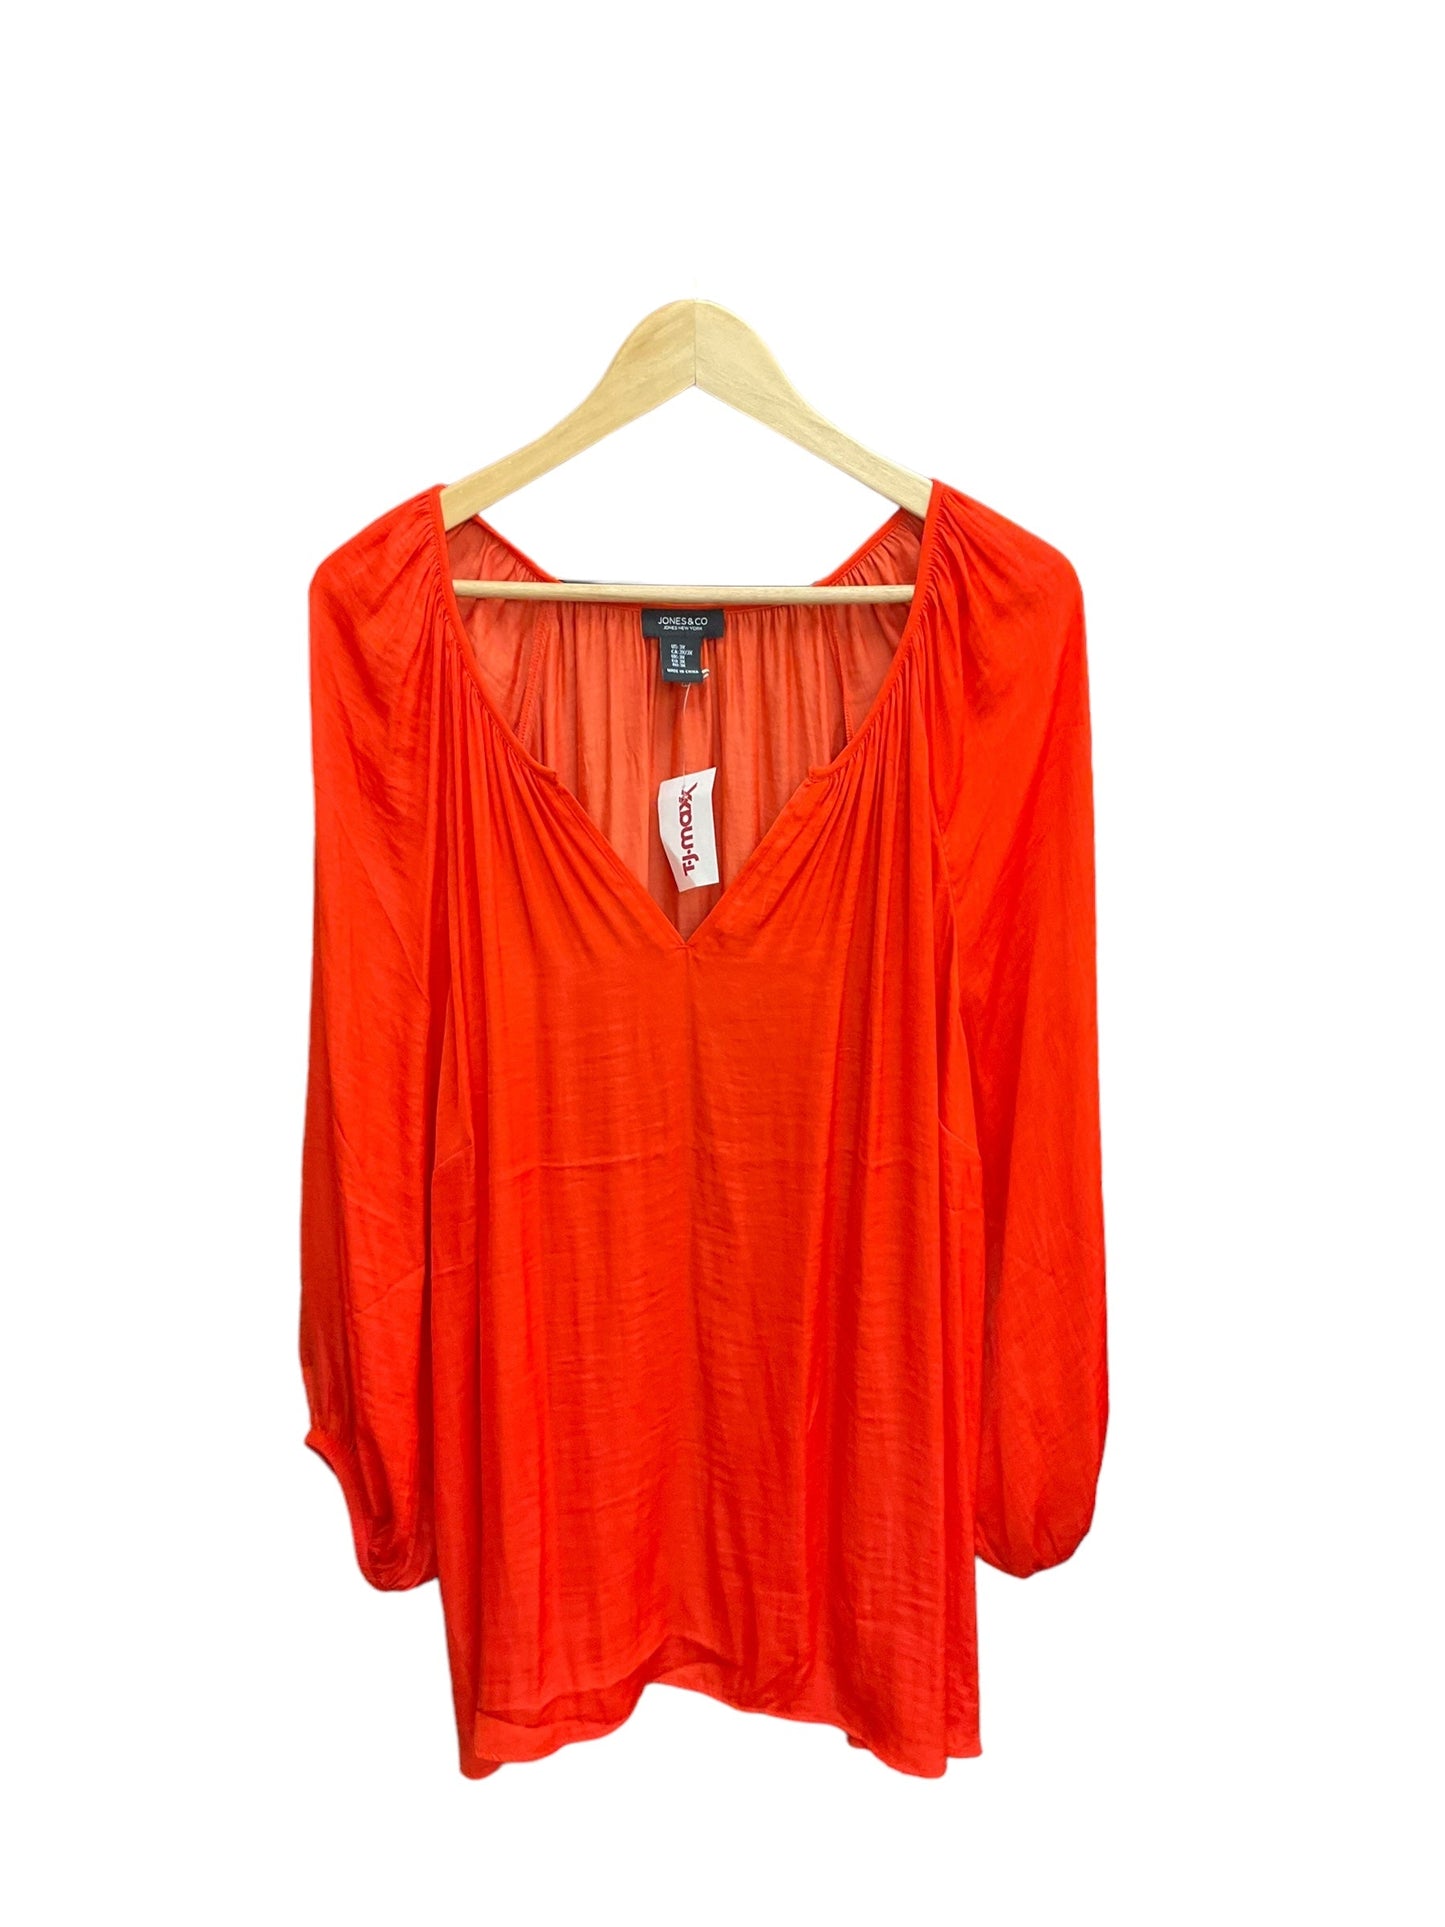 Orange Top Long Sleeve Jones And Co, Size 3x